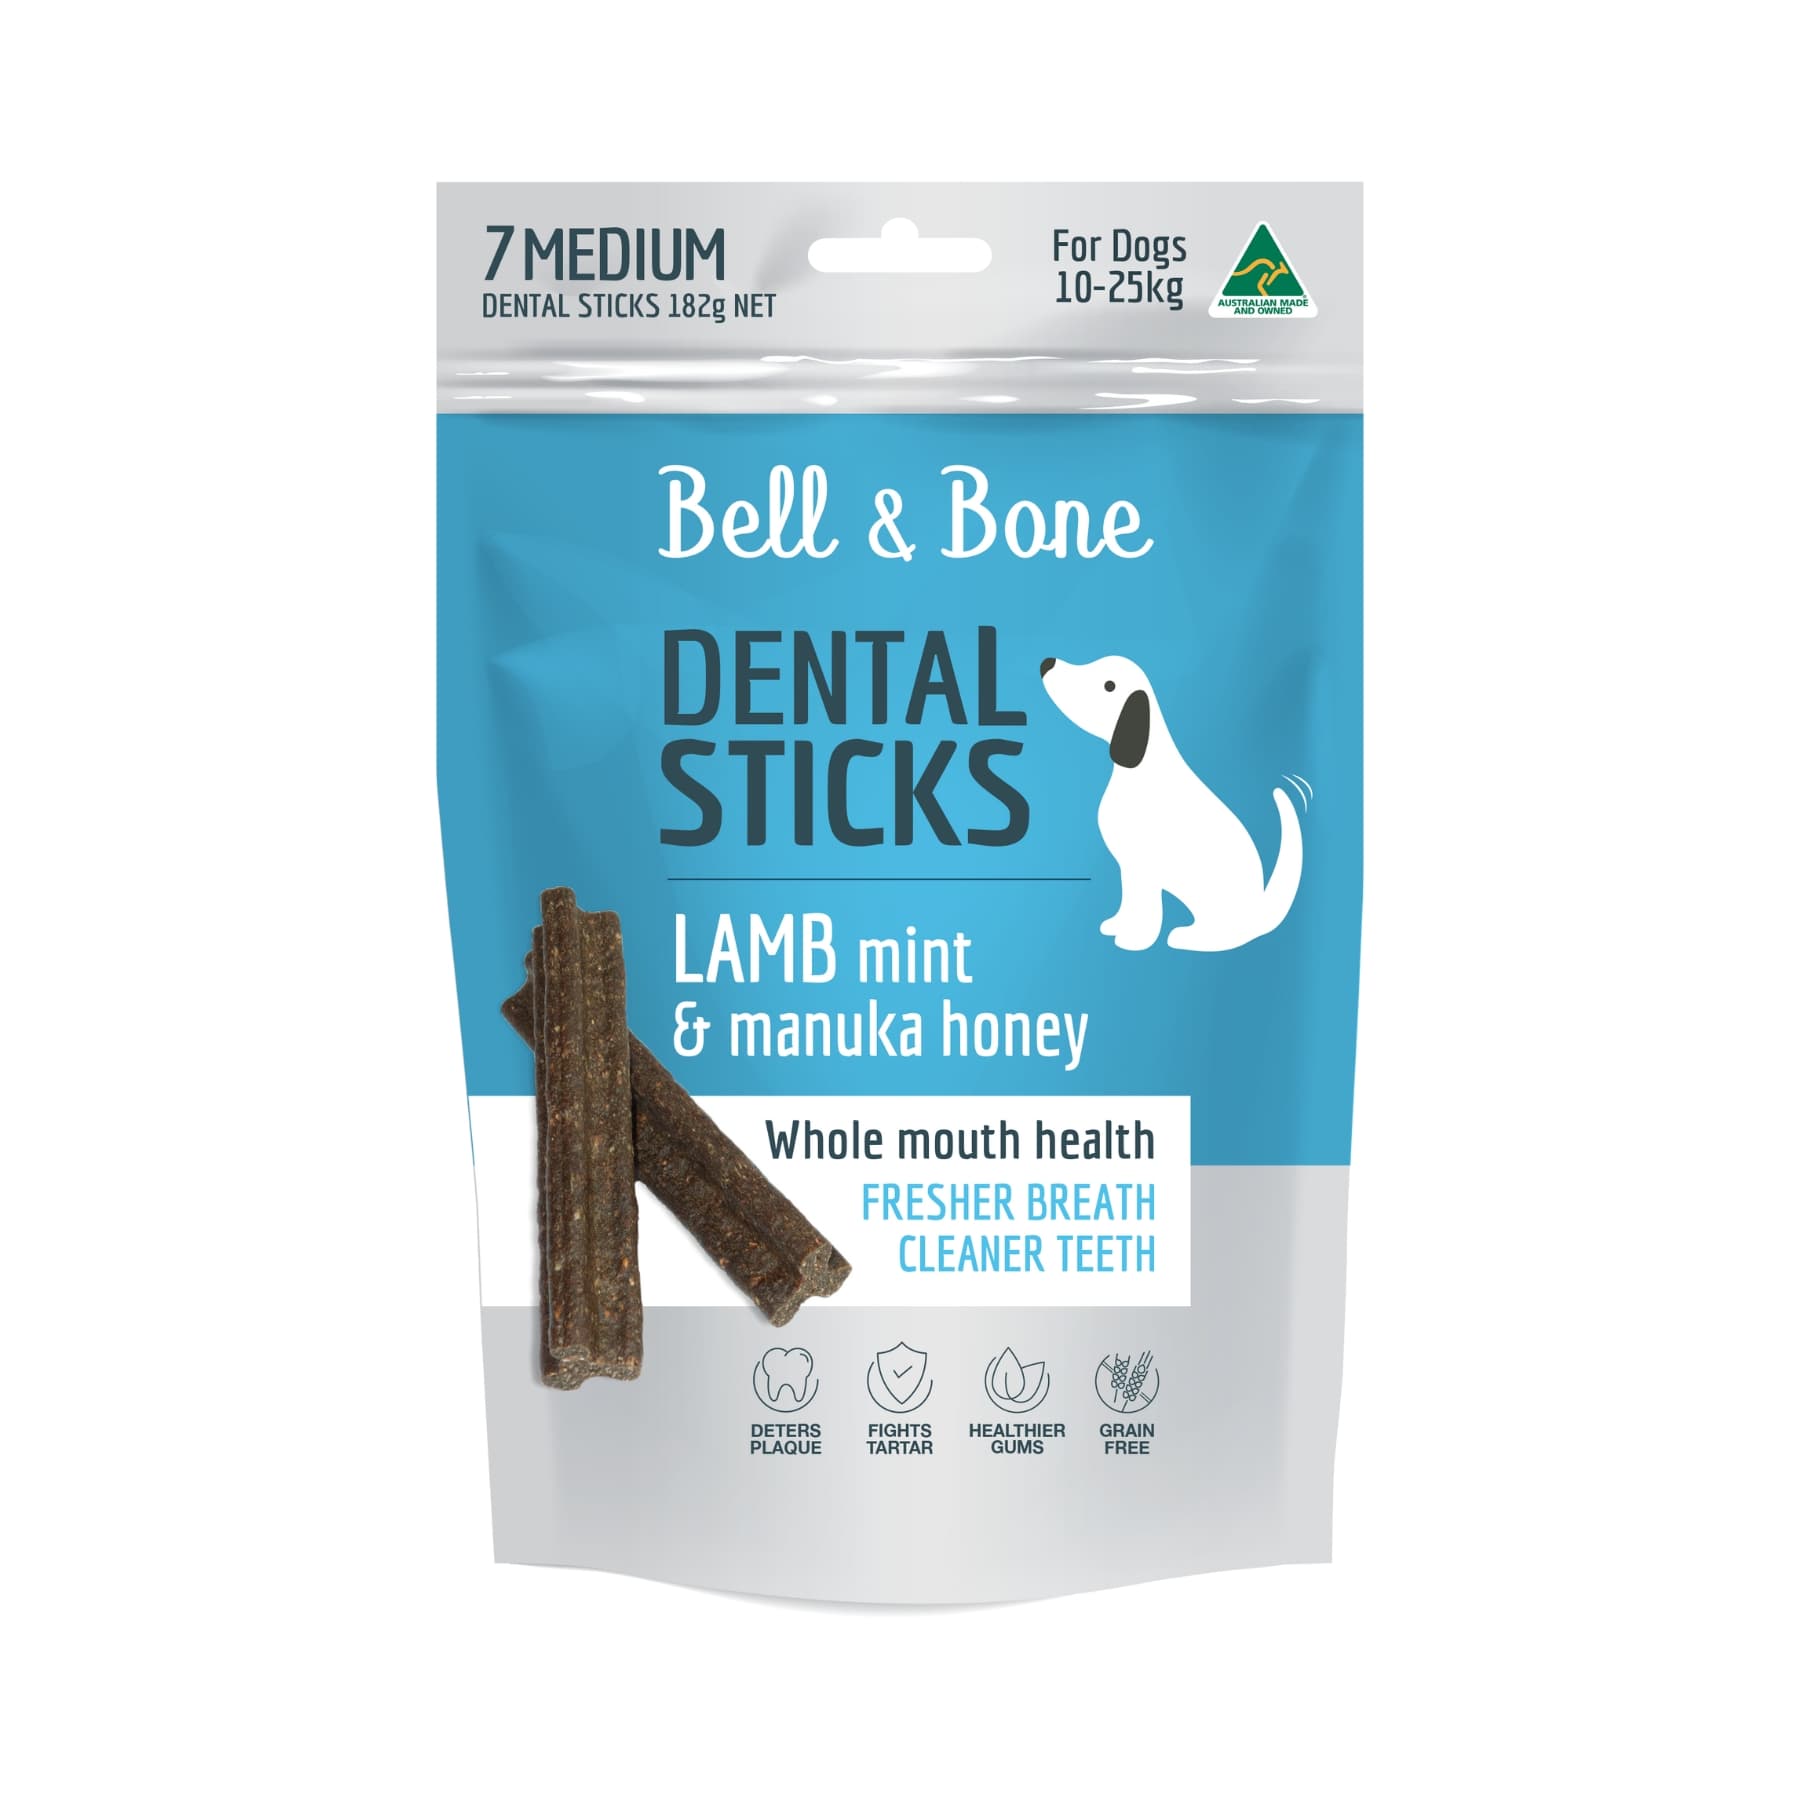 Bell & Bone Dental Sticks Lamb, Mint & Manuka Honey Medium. Australian Made Dental Treats for Dogs.